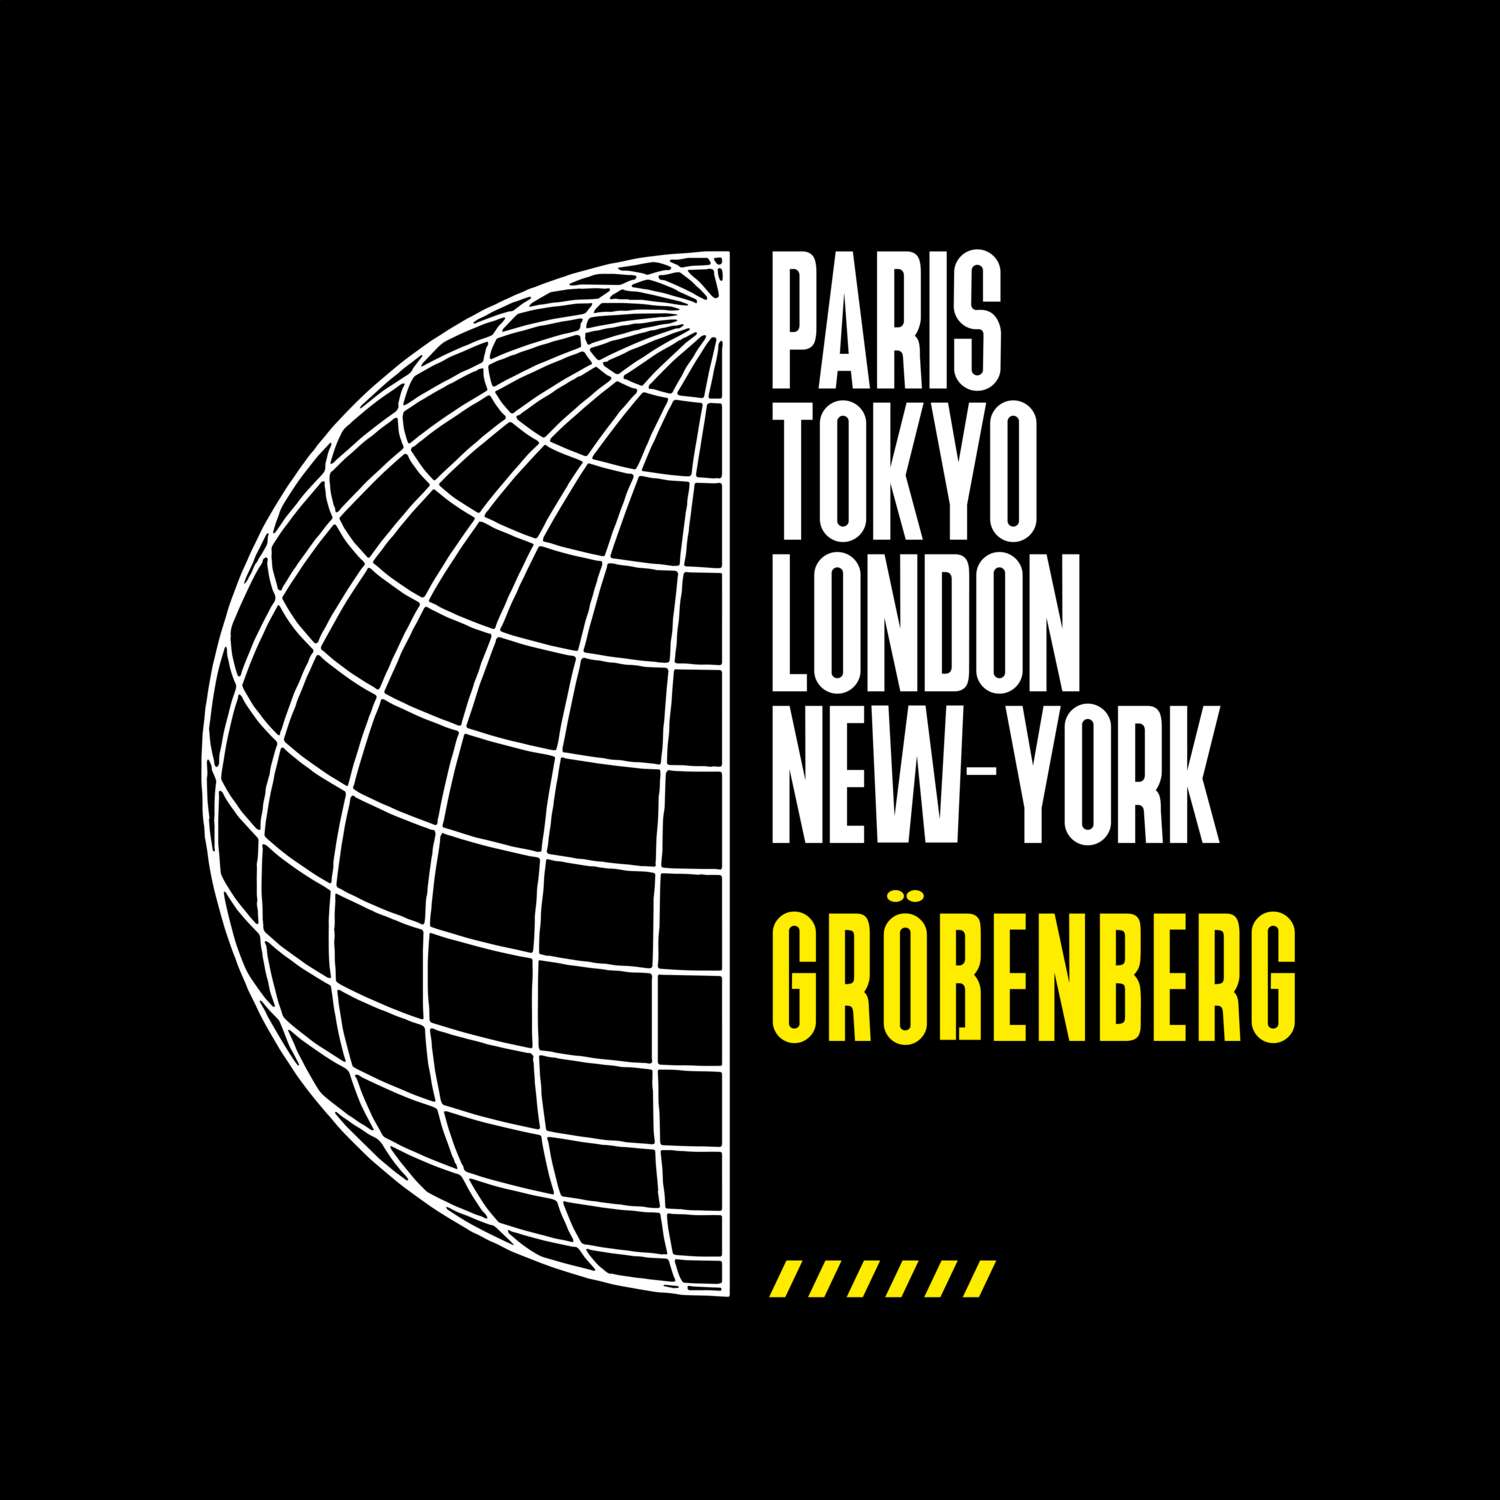 Größenberg T-Shirt »Paris Tokyo London«